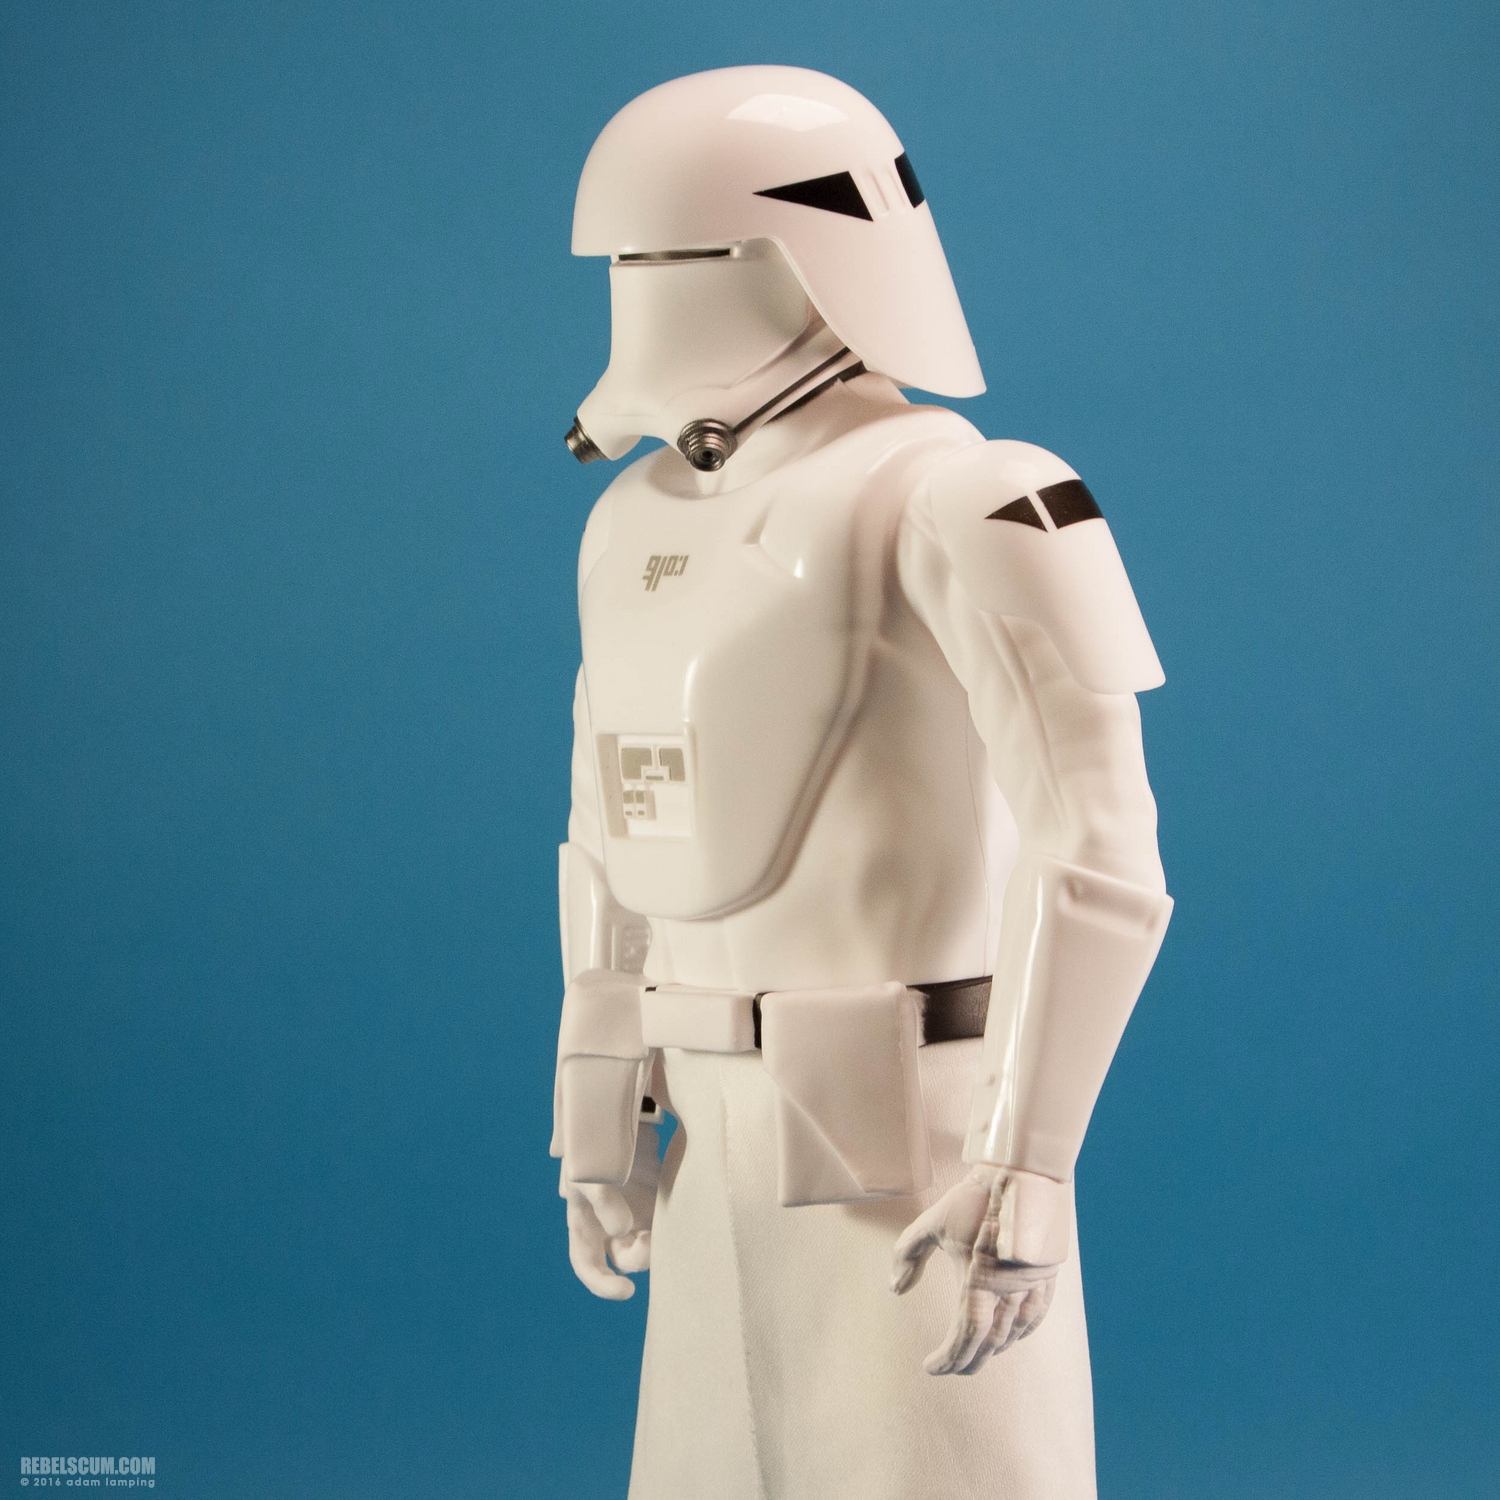 jakks-pacific-first-order-snowtrooper-18-inch-figure-007.jpg